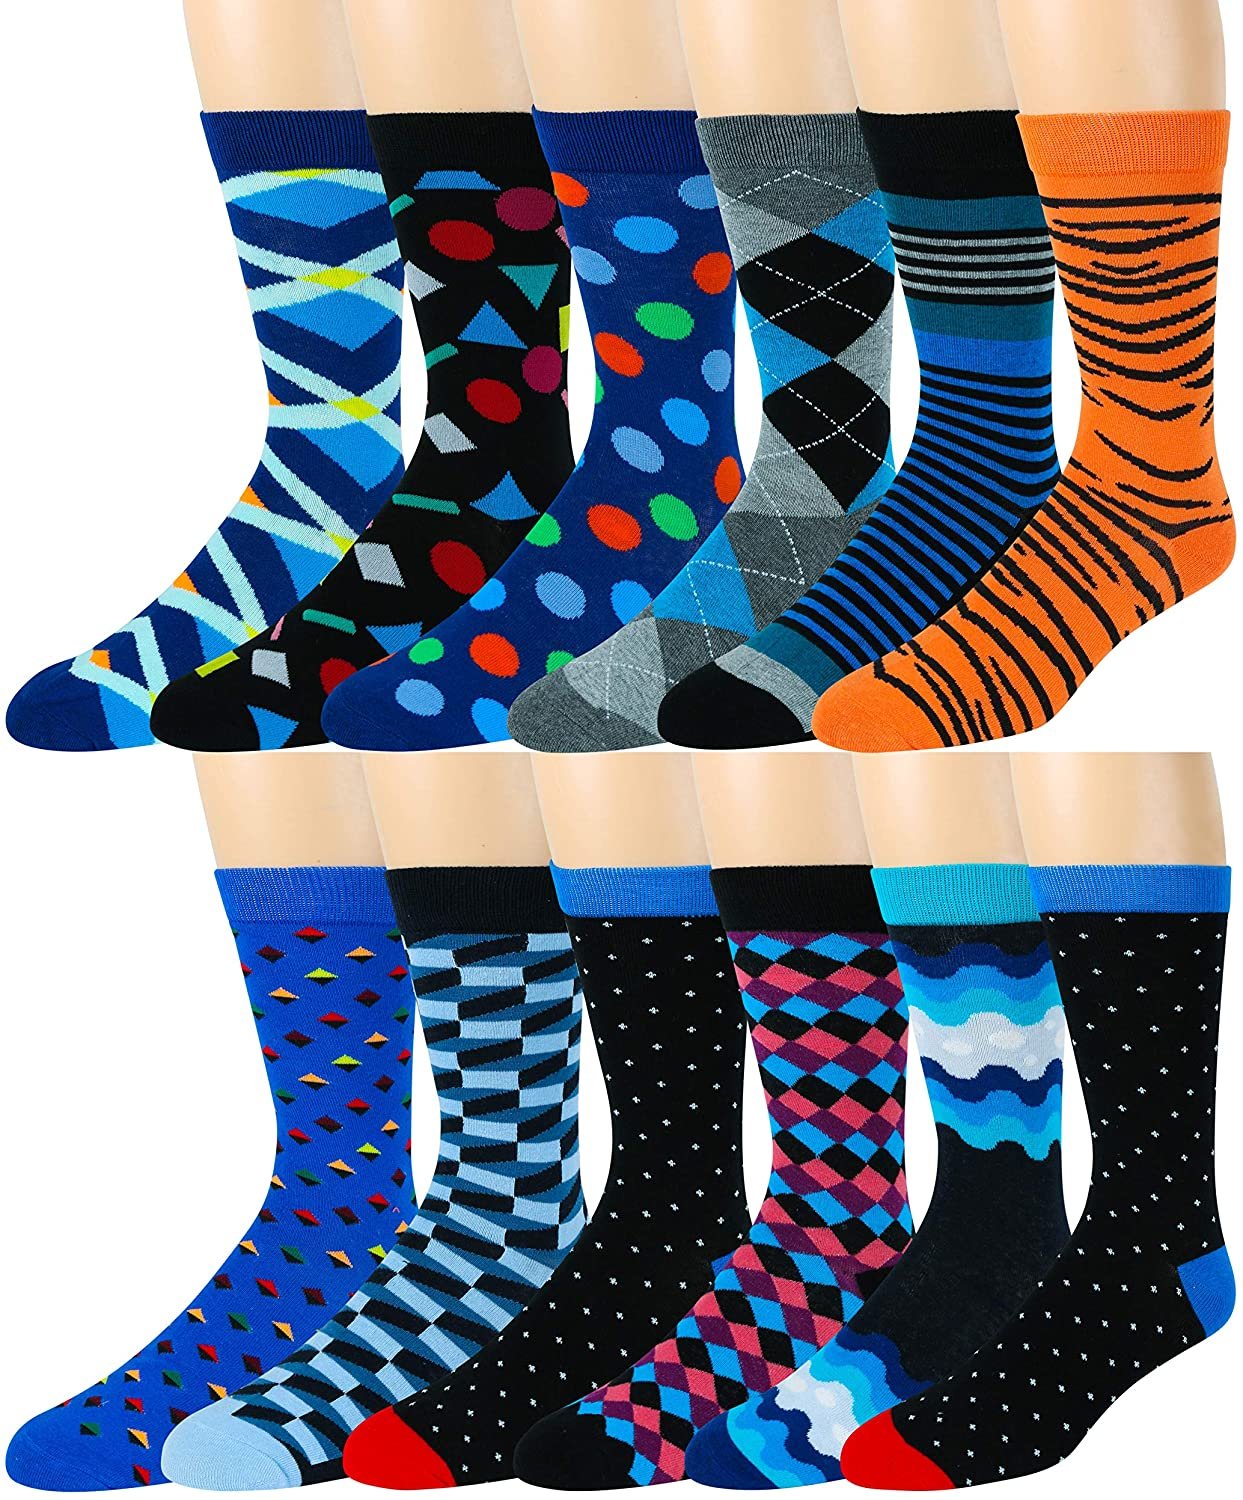 Zeke Men S Dress Socks Funky Fun Colorful Crew Socks 12 Assorted Patterns Ebay